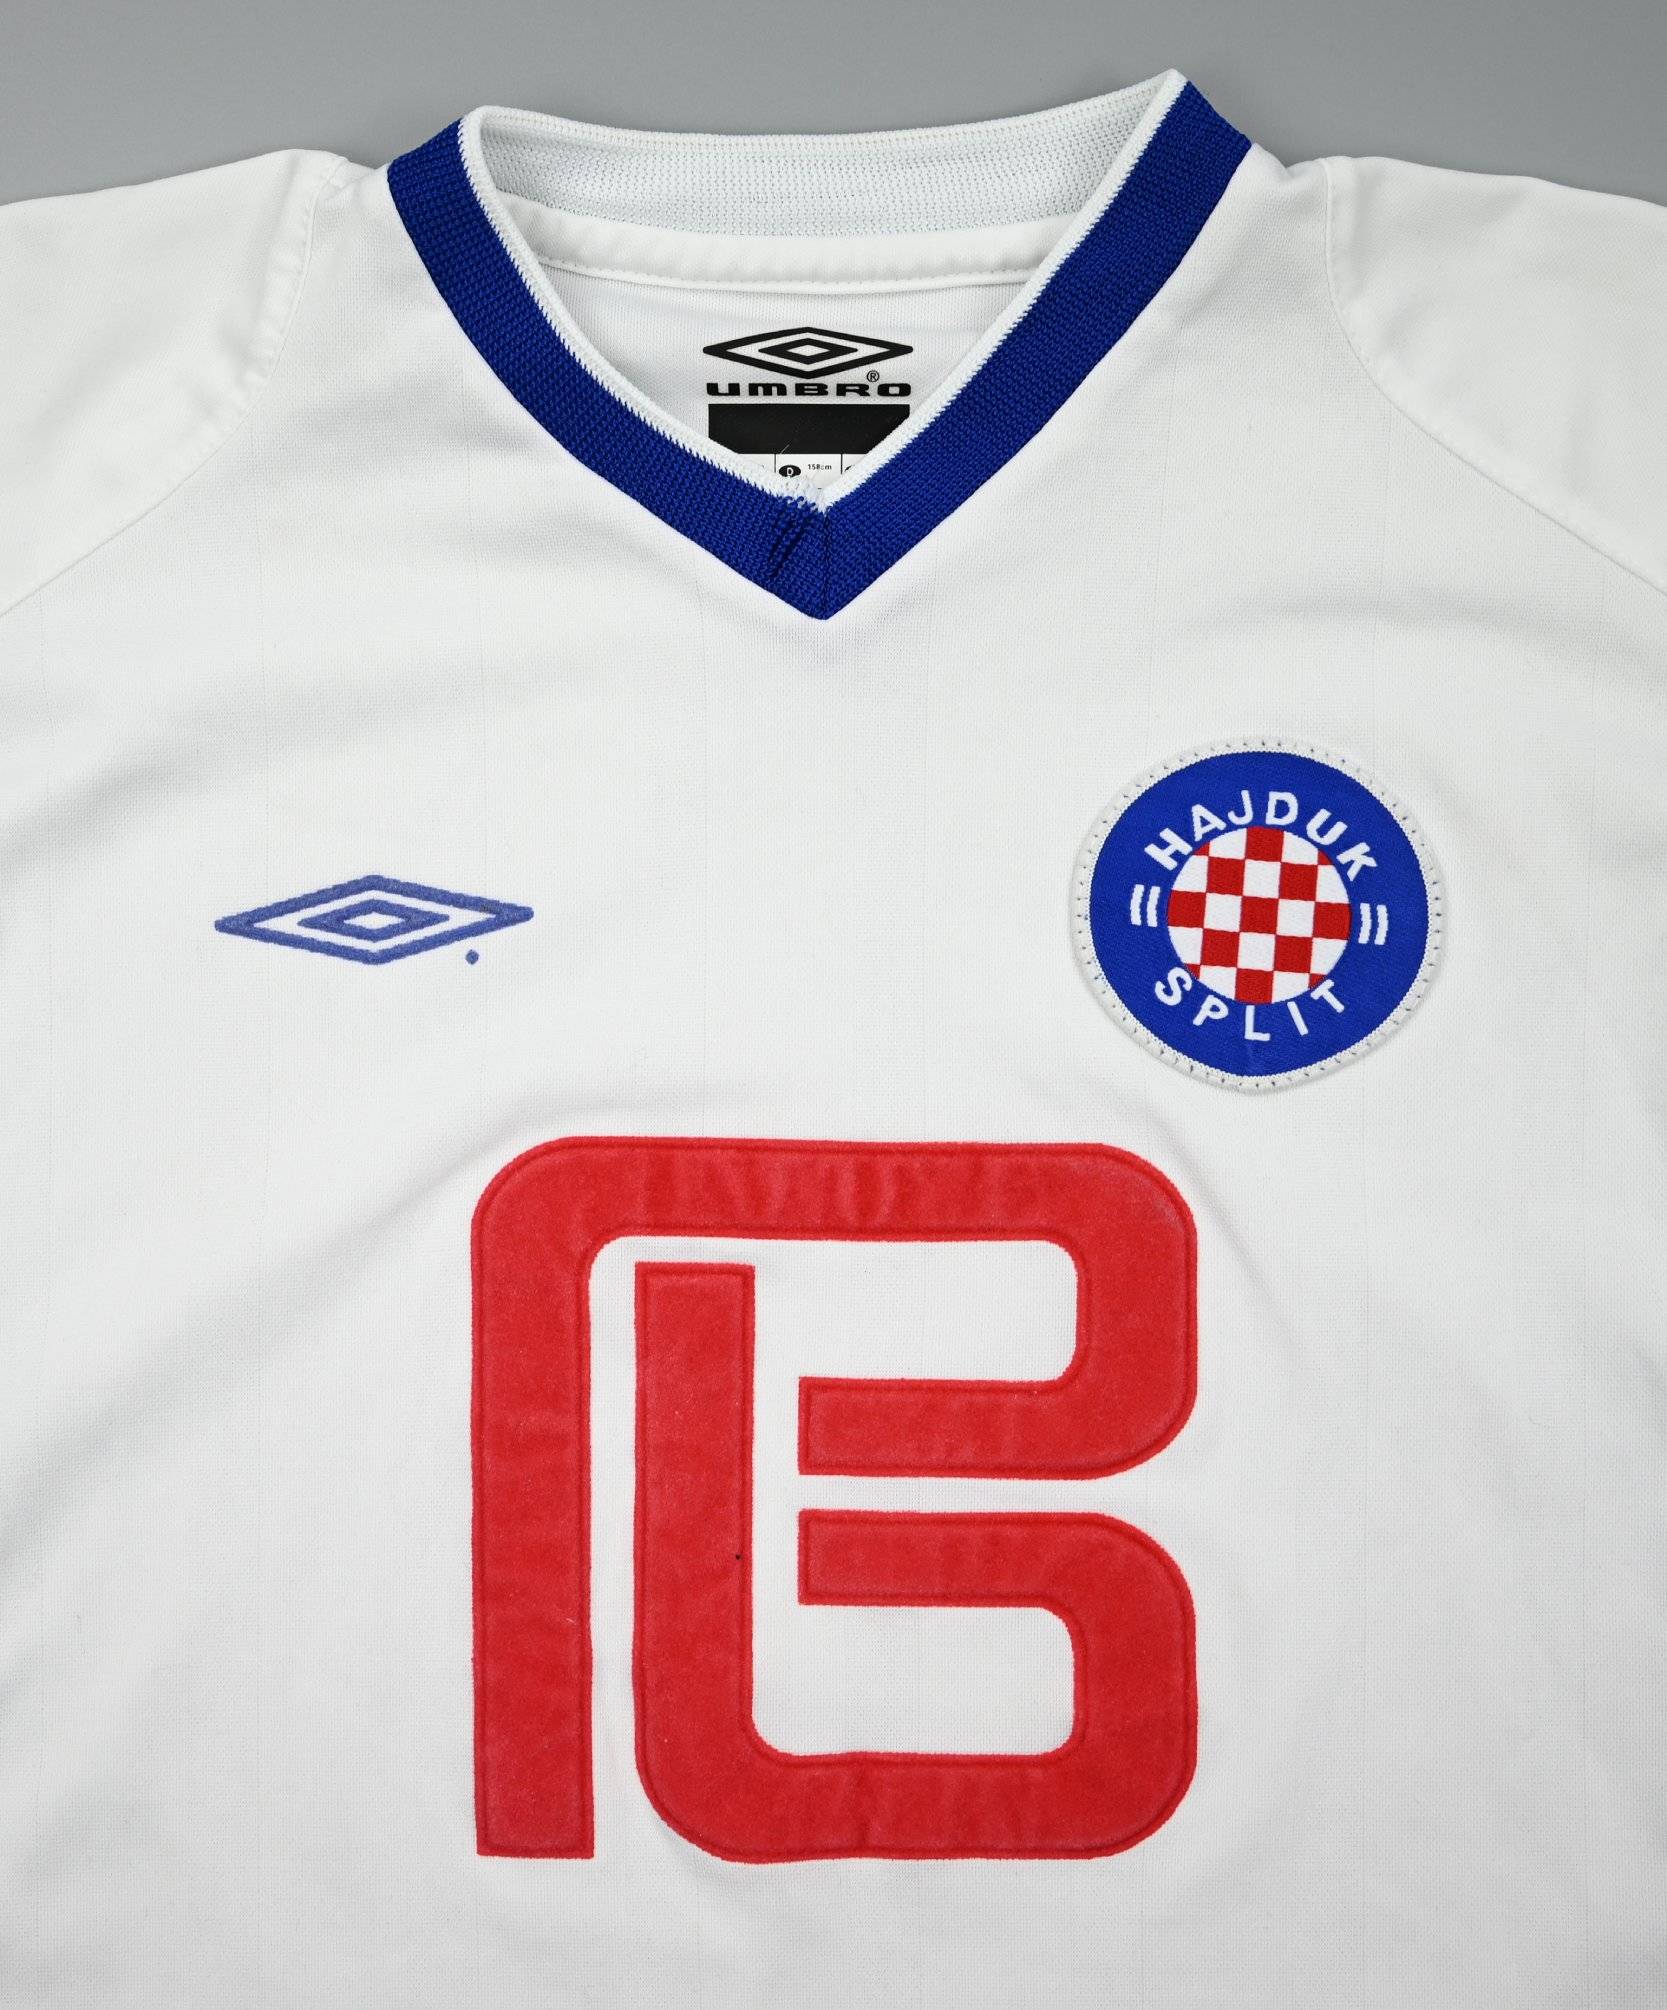 Camisa Titular Hajduk Split 2003-04